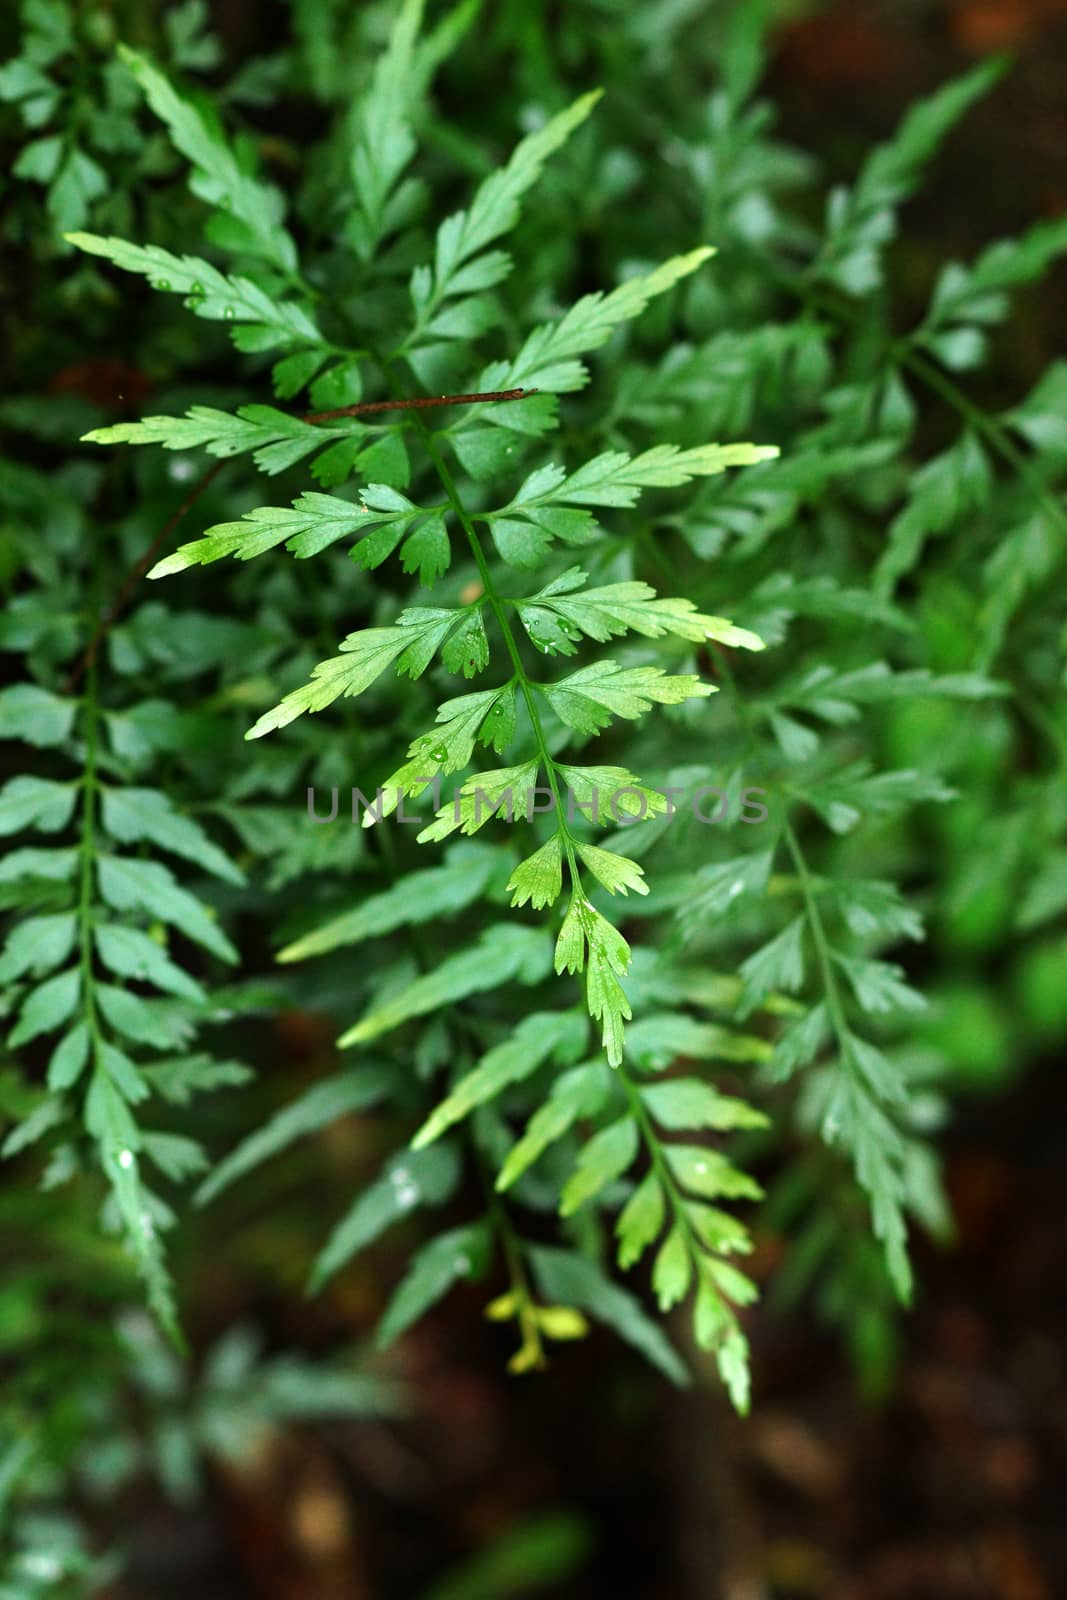 Green fern leaves by Noppharat_th